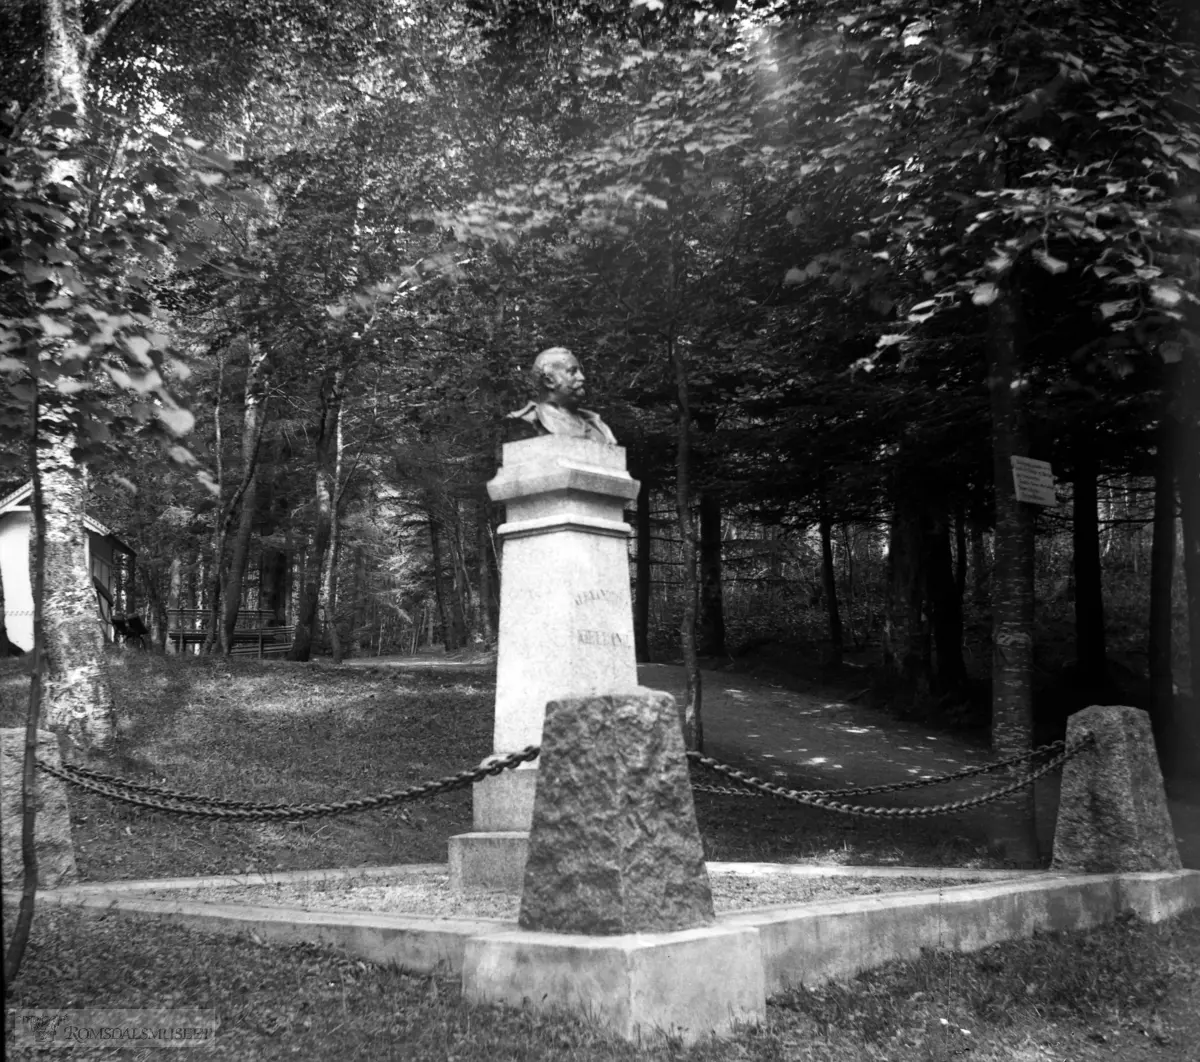 Alexander Kielland f. 1849 d. 6/4-1906 bysten i Reknesparken..Avduket 16 juni 1907. Bysten er laget av Peder Severin Krøyer (1851-1909). (Bjørnstjerne Bjørnson holdt talen under avdukingen av bysten.)